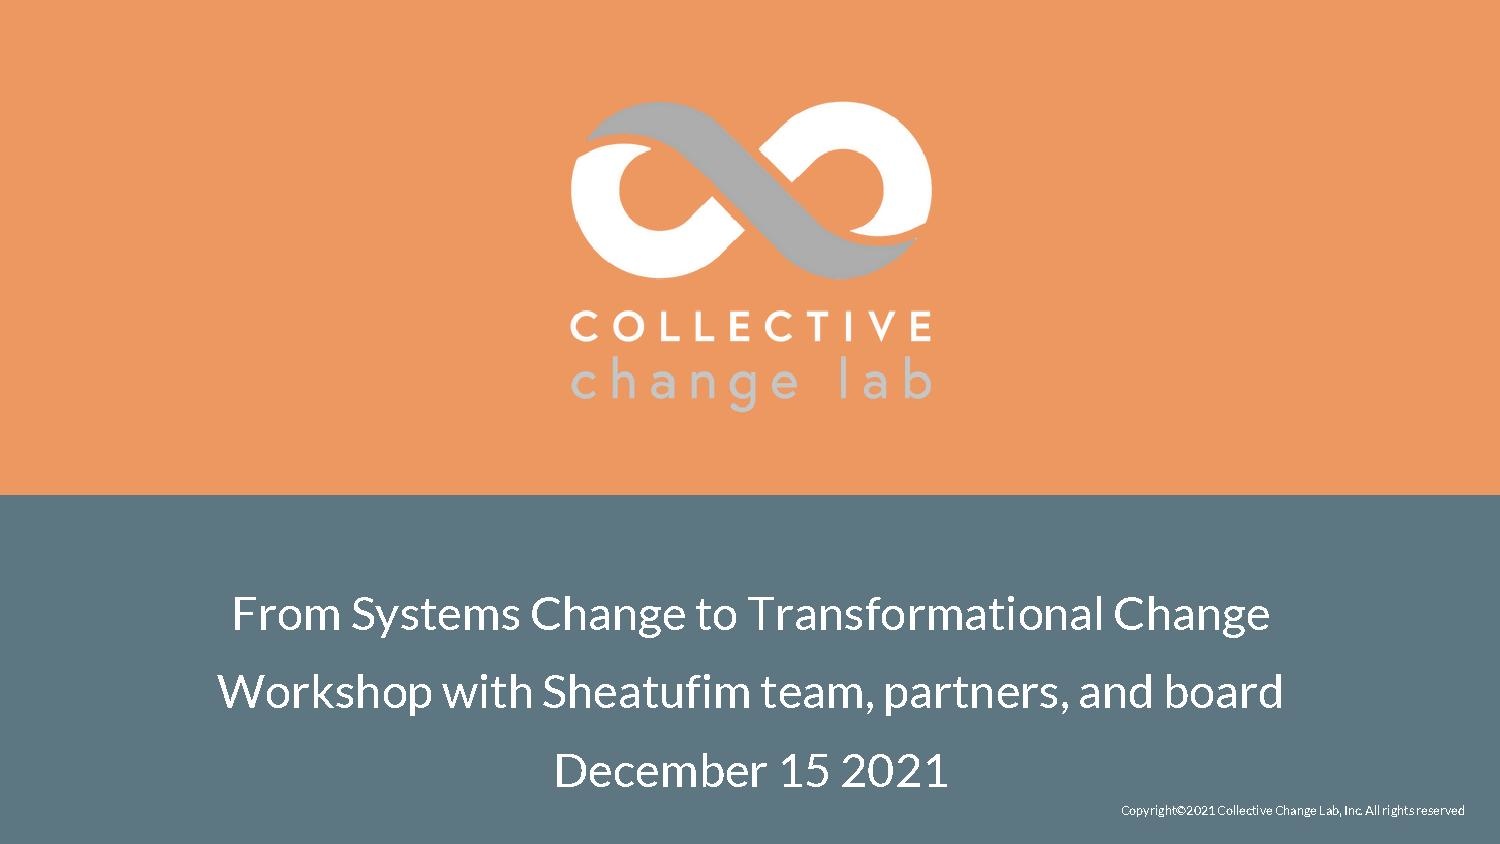 Sheatufim transformational change.pdf